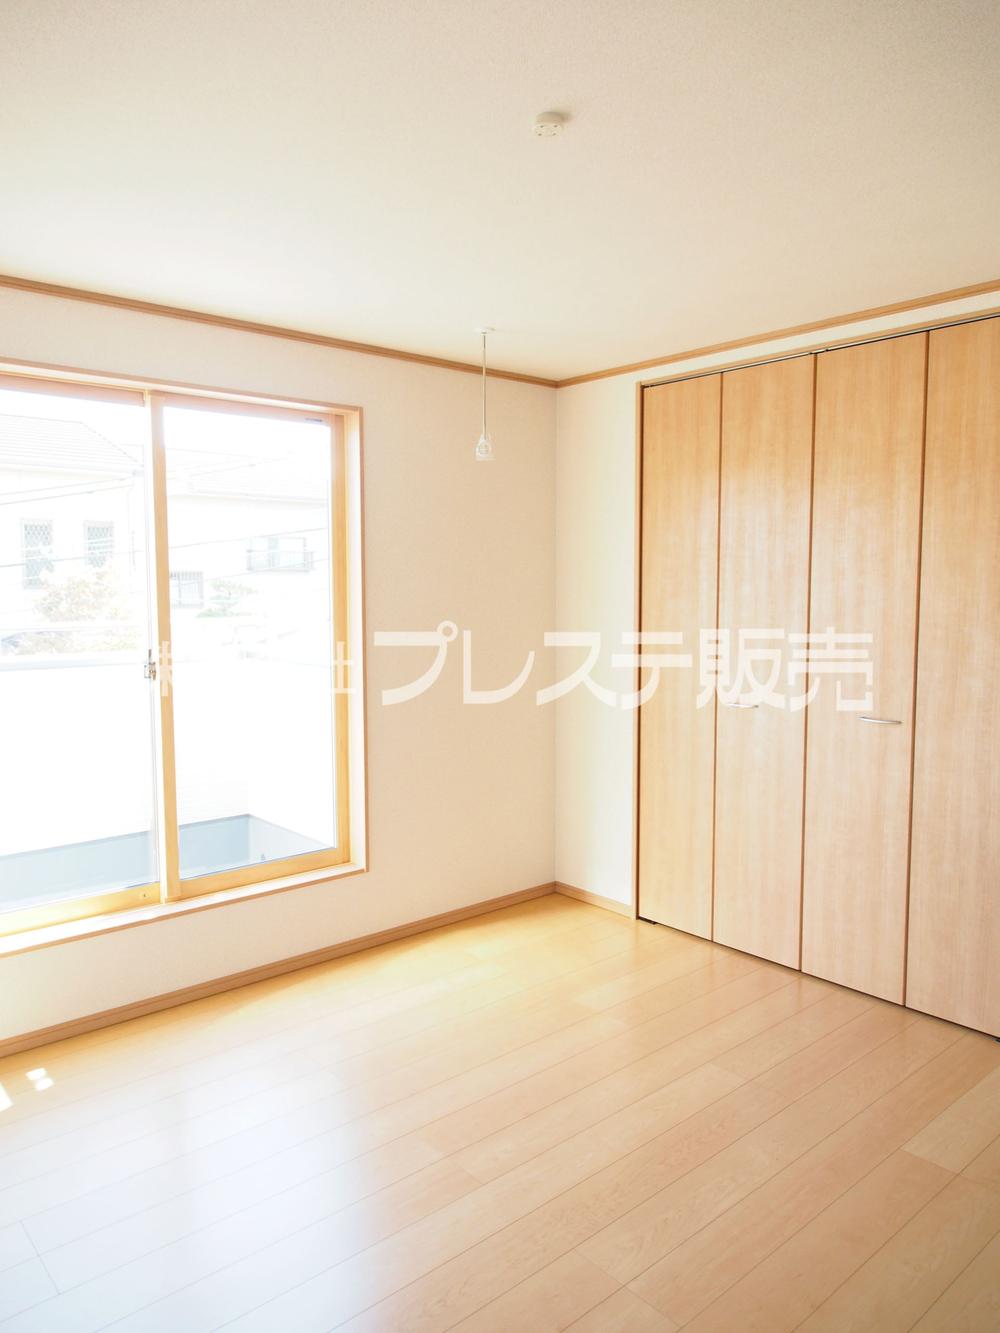 Non-living room. Local photo (No. 2 place 2 Kaikyoshitsu)